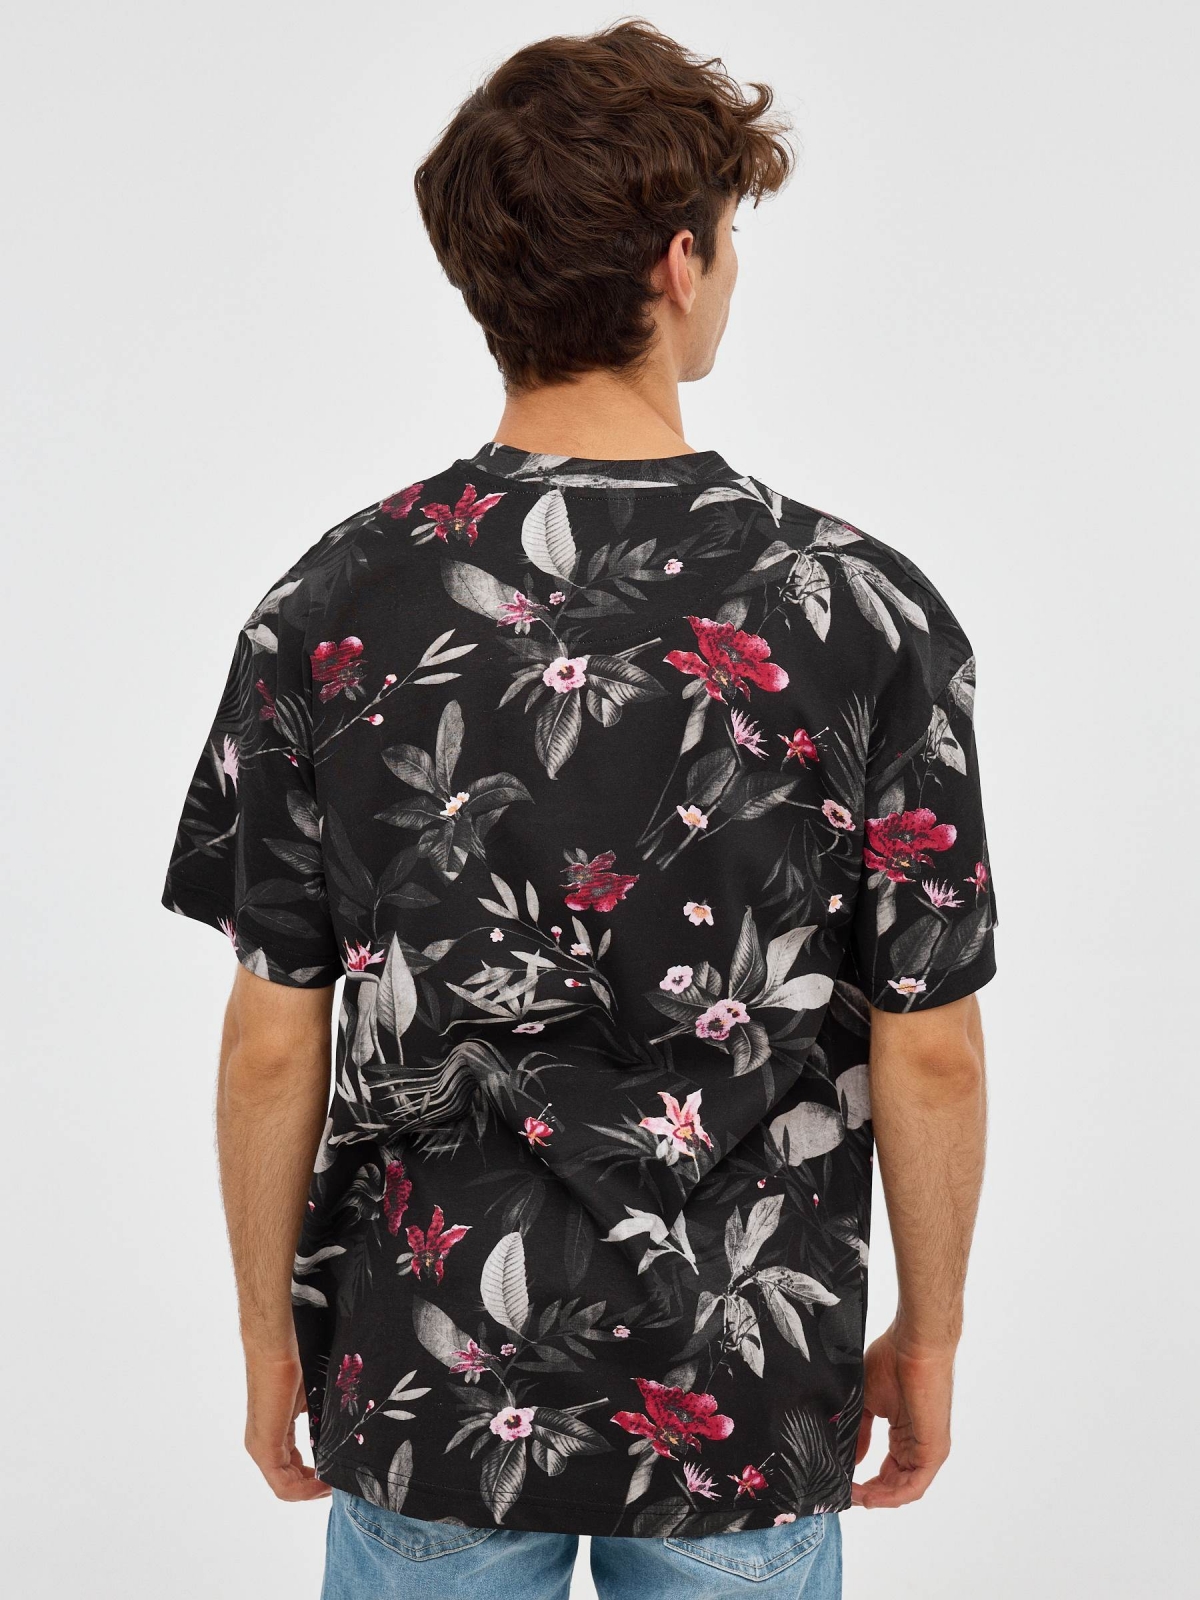 T-shirt floral oversized preto vista meia traseira